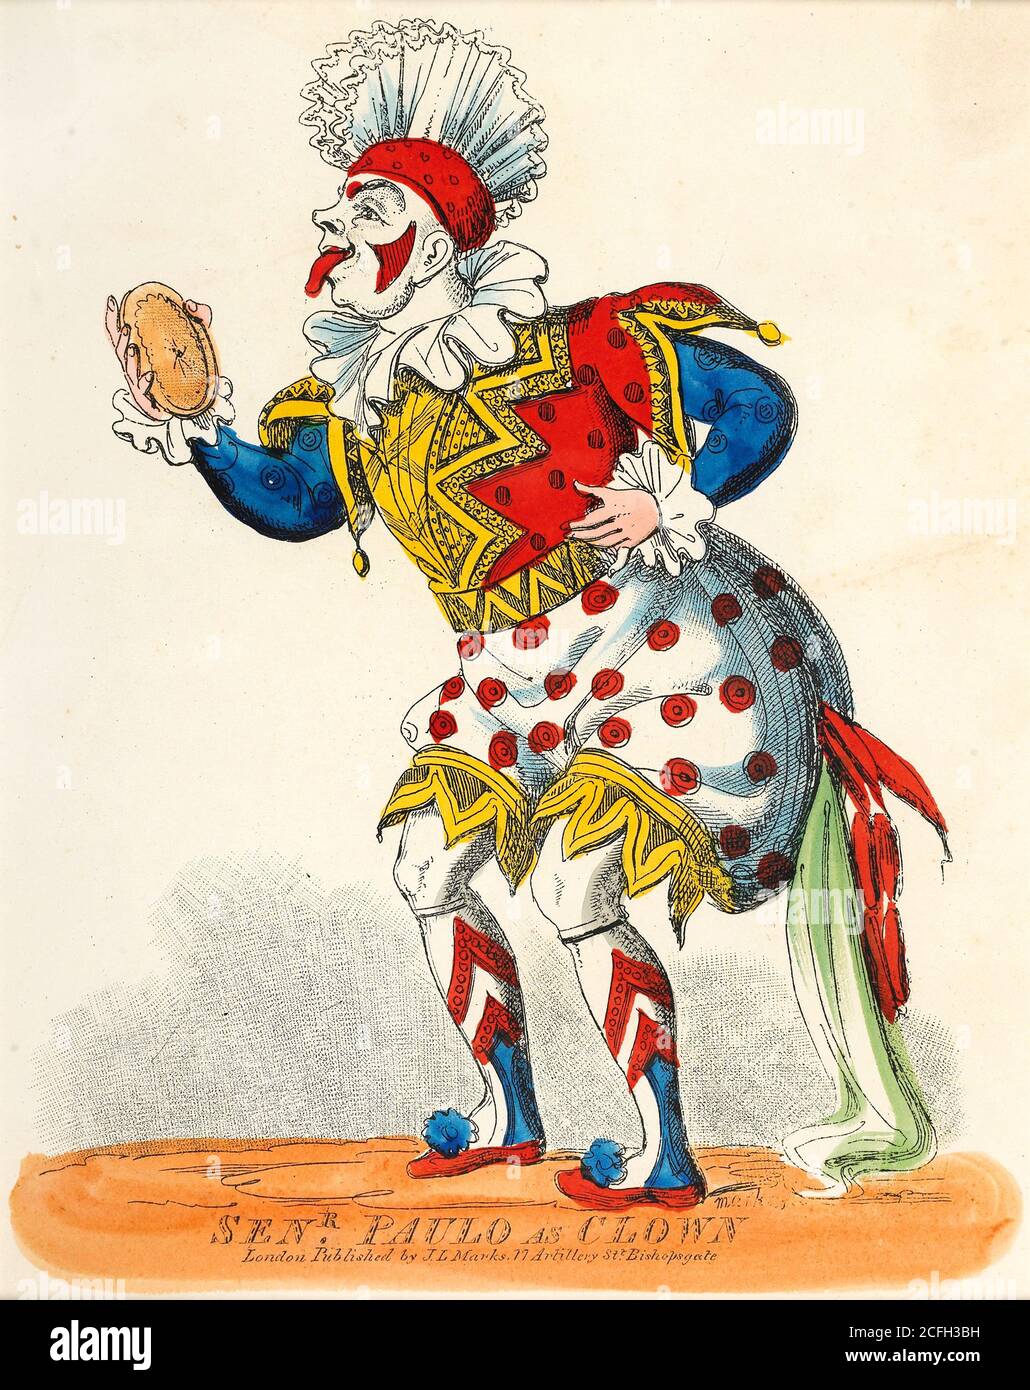 Marks, J.L., Theatrical Portrait, Senr Paulo as Clown, Circa 1822-1839,  Print, Museum of London, England. Stock Photo